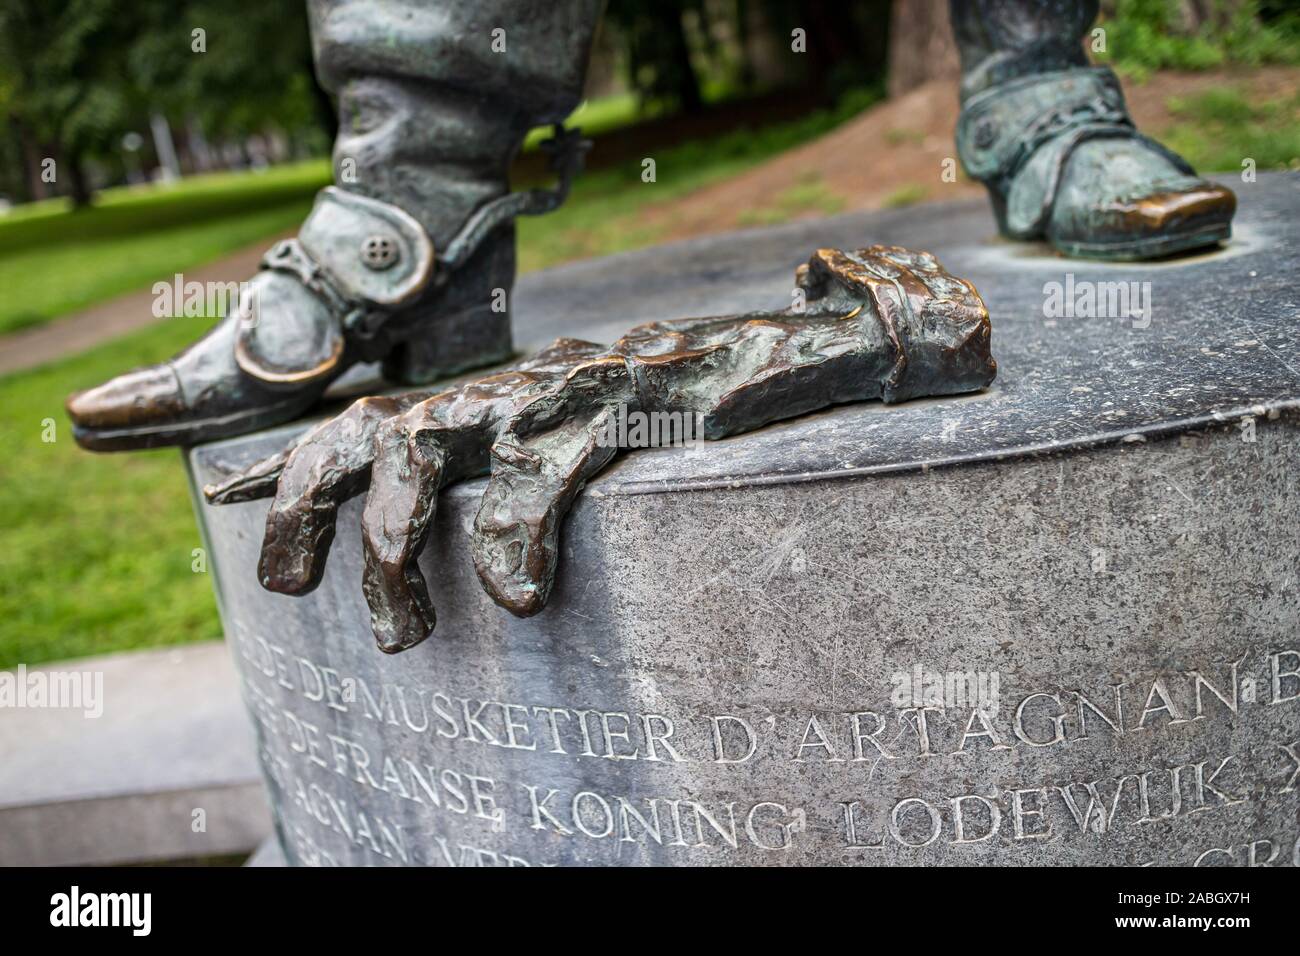 d'Artagnan (Charles de Batz de Castelmore) Statue glove detail in the Aldenhofpark Maastricht, Netherlands Stock Photo